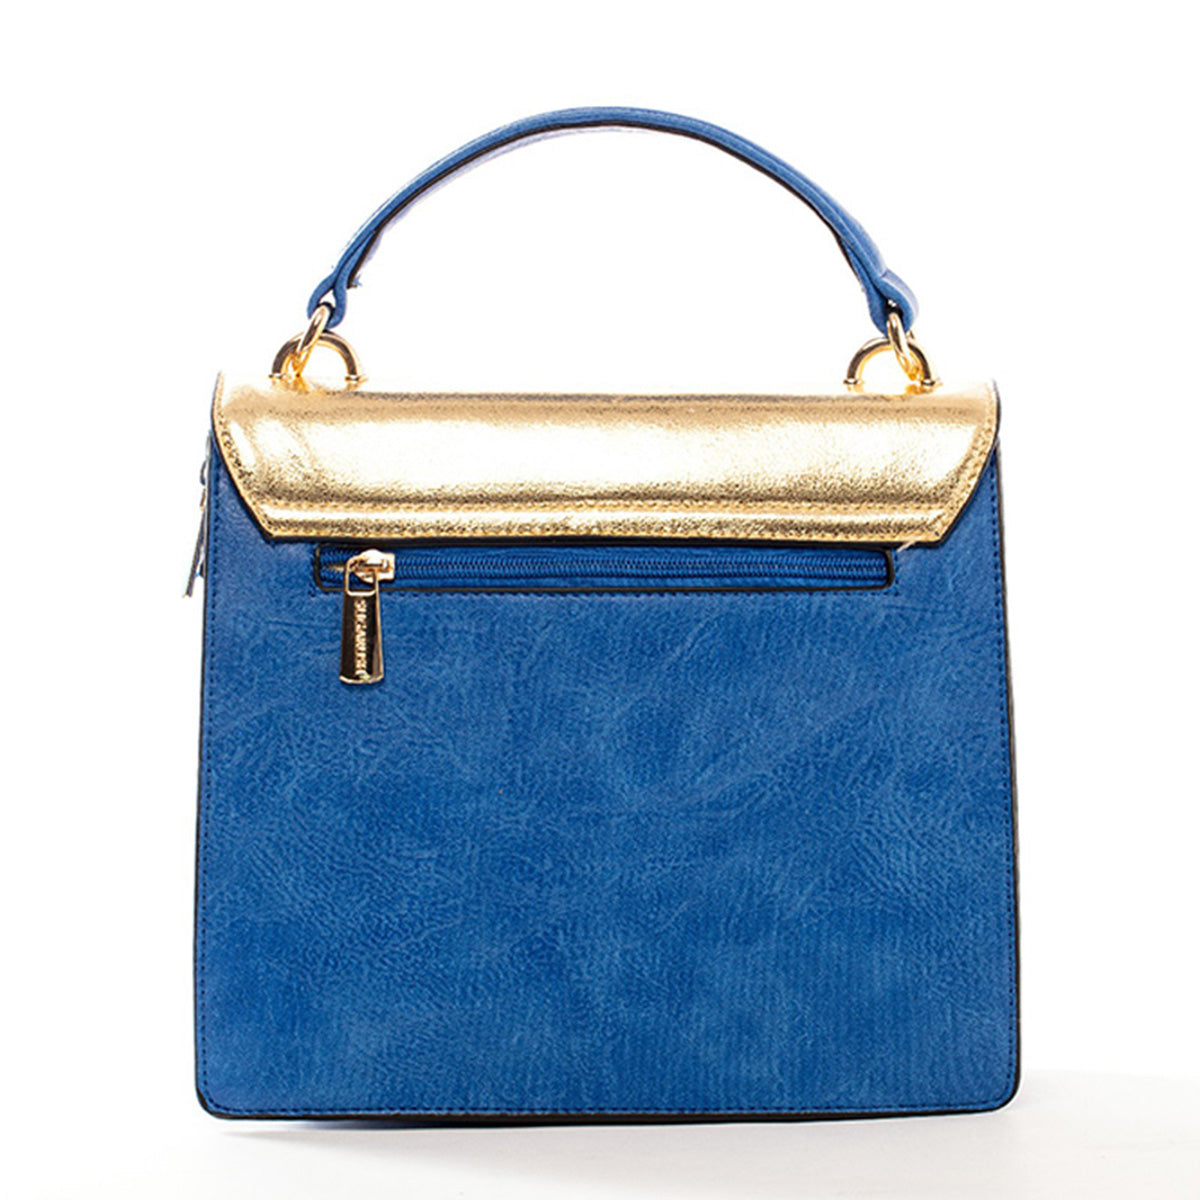 Sugarush Vegas Satchel Handbag Royal Blue Medium